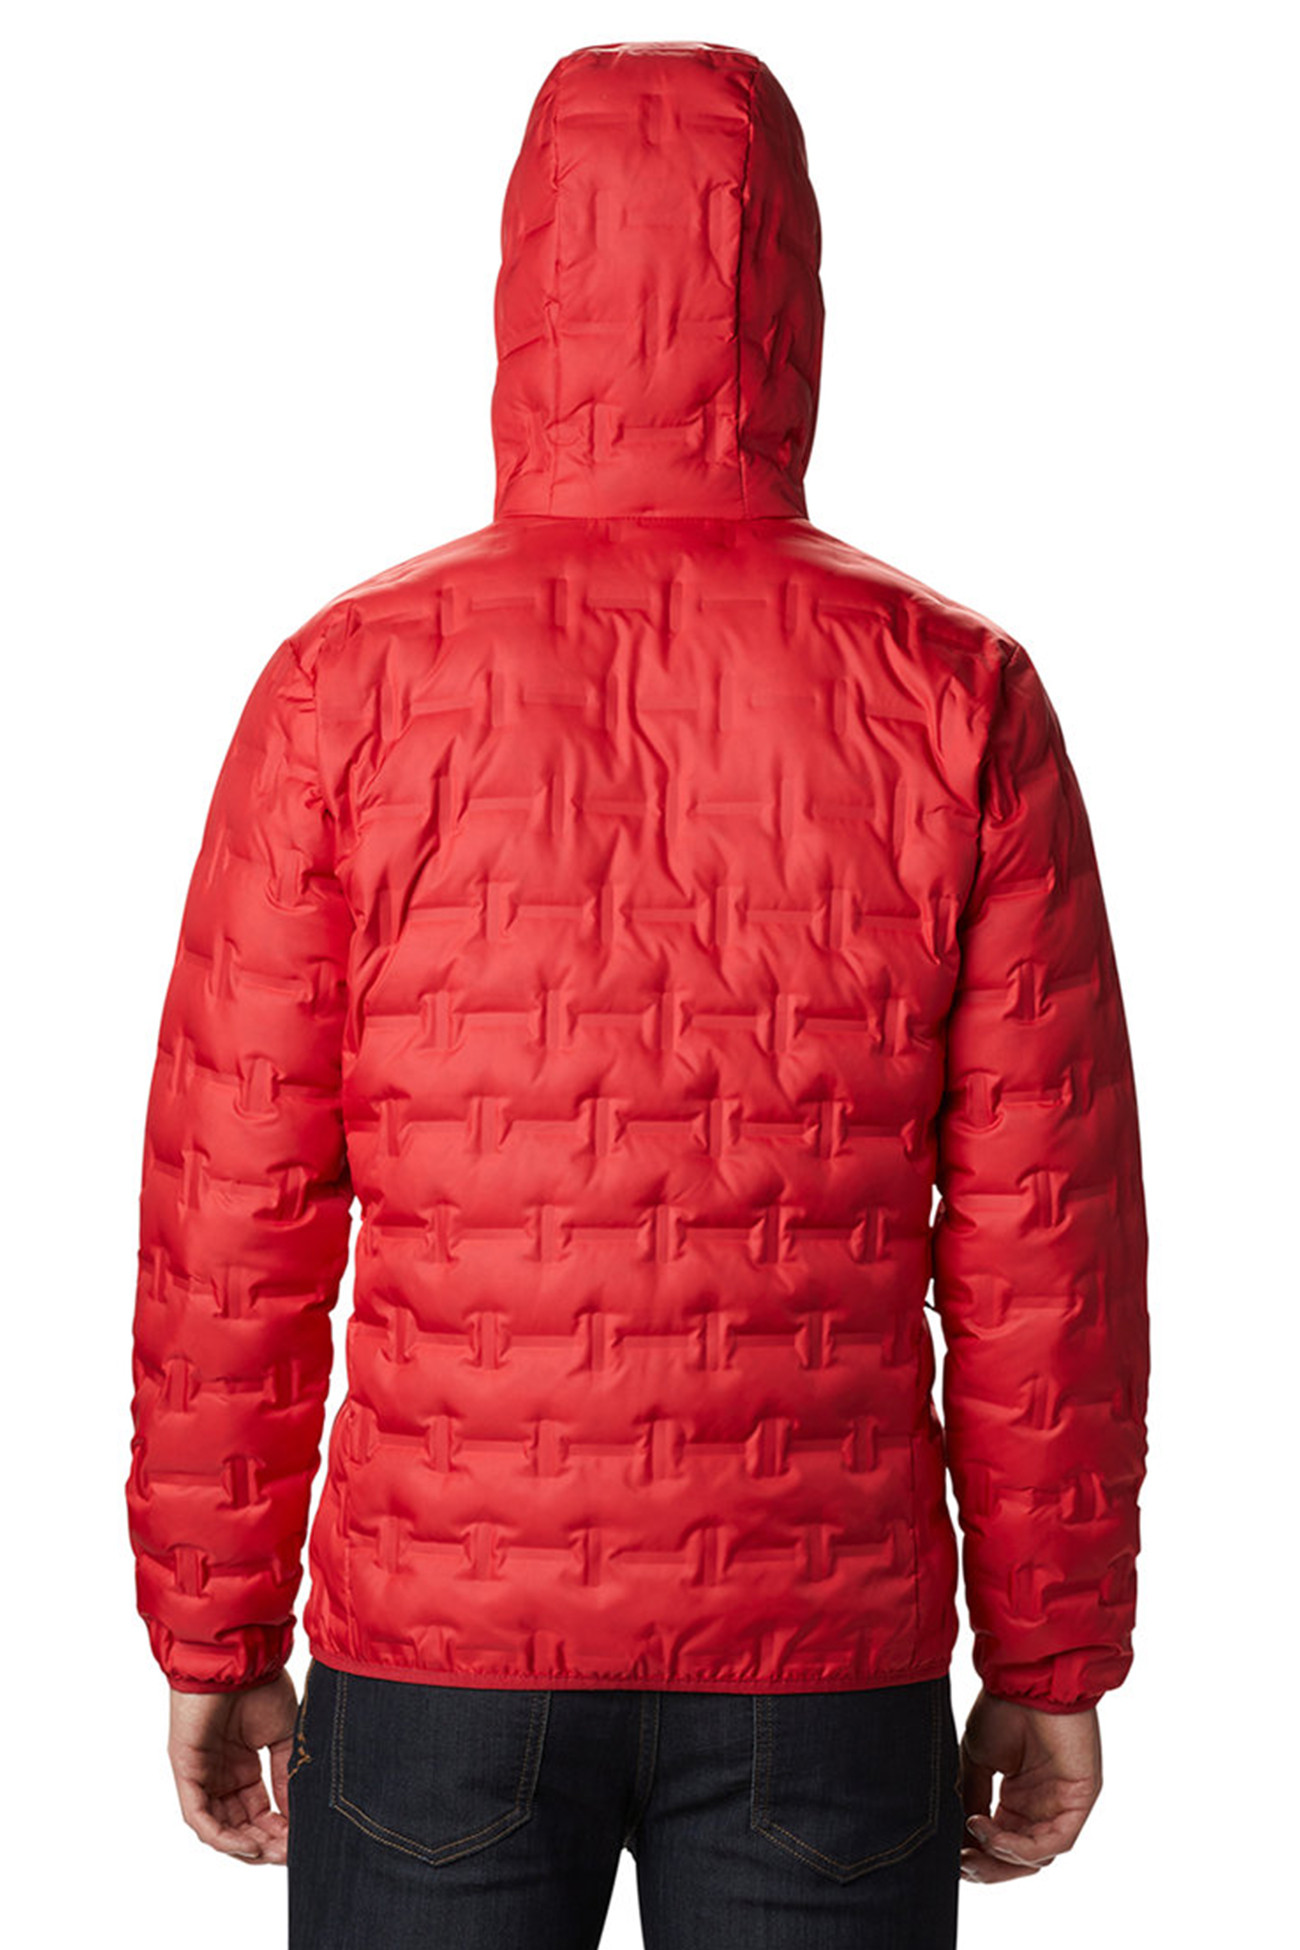 Куртка пуховая мужская Columbia Delta Ridge красная 1875892-613 